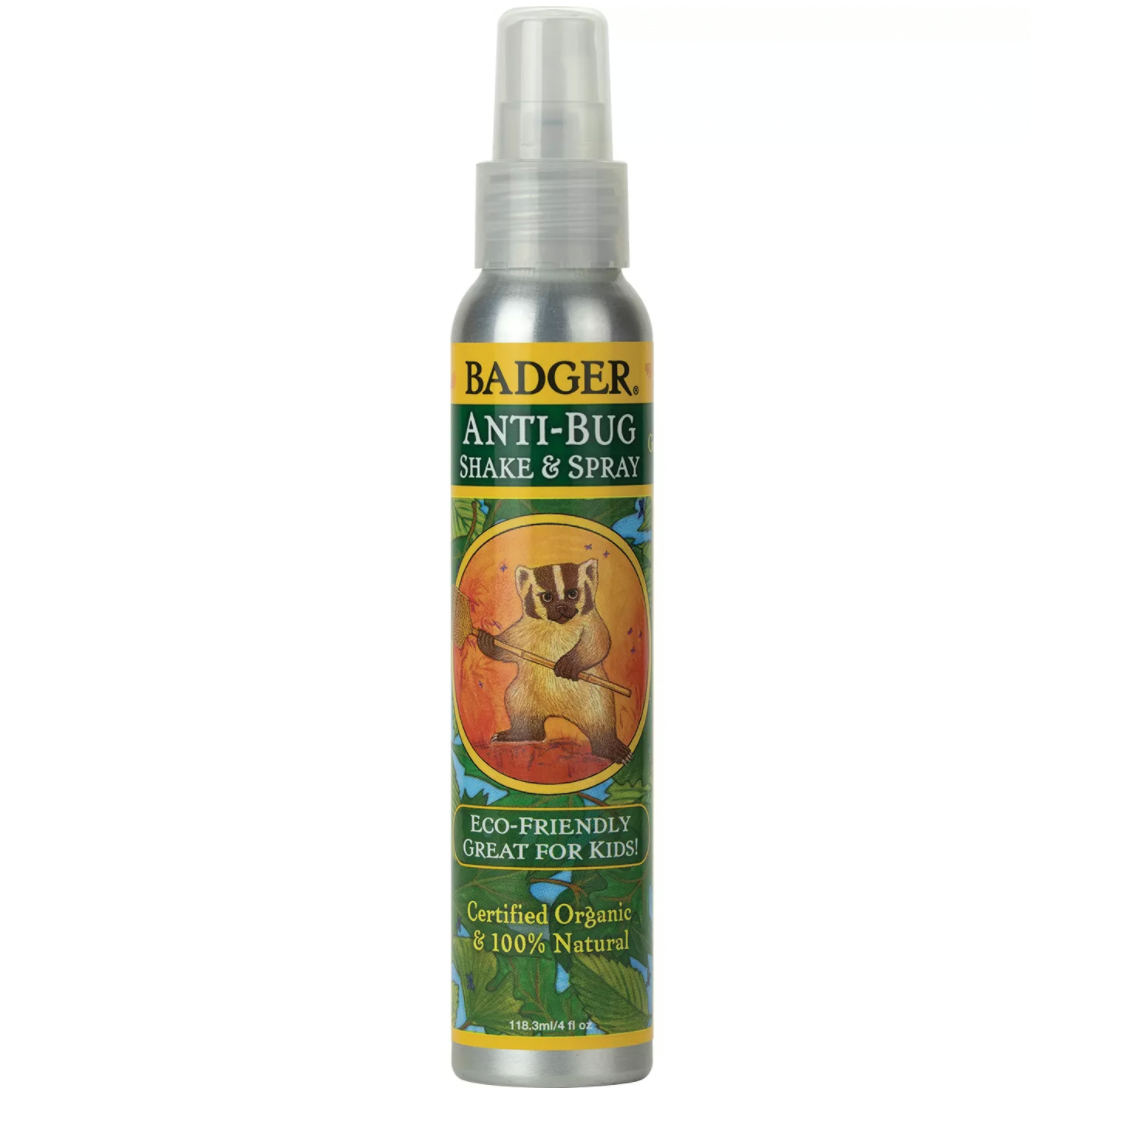 Badger Anti-Bug Shake & Spray